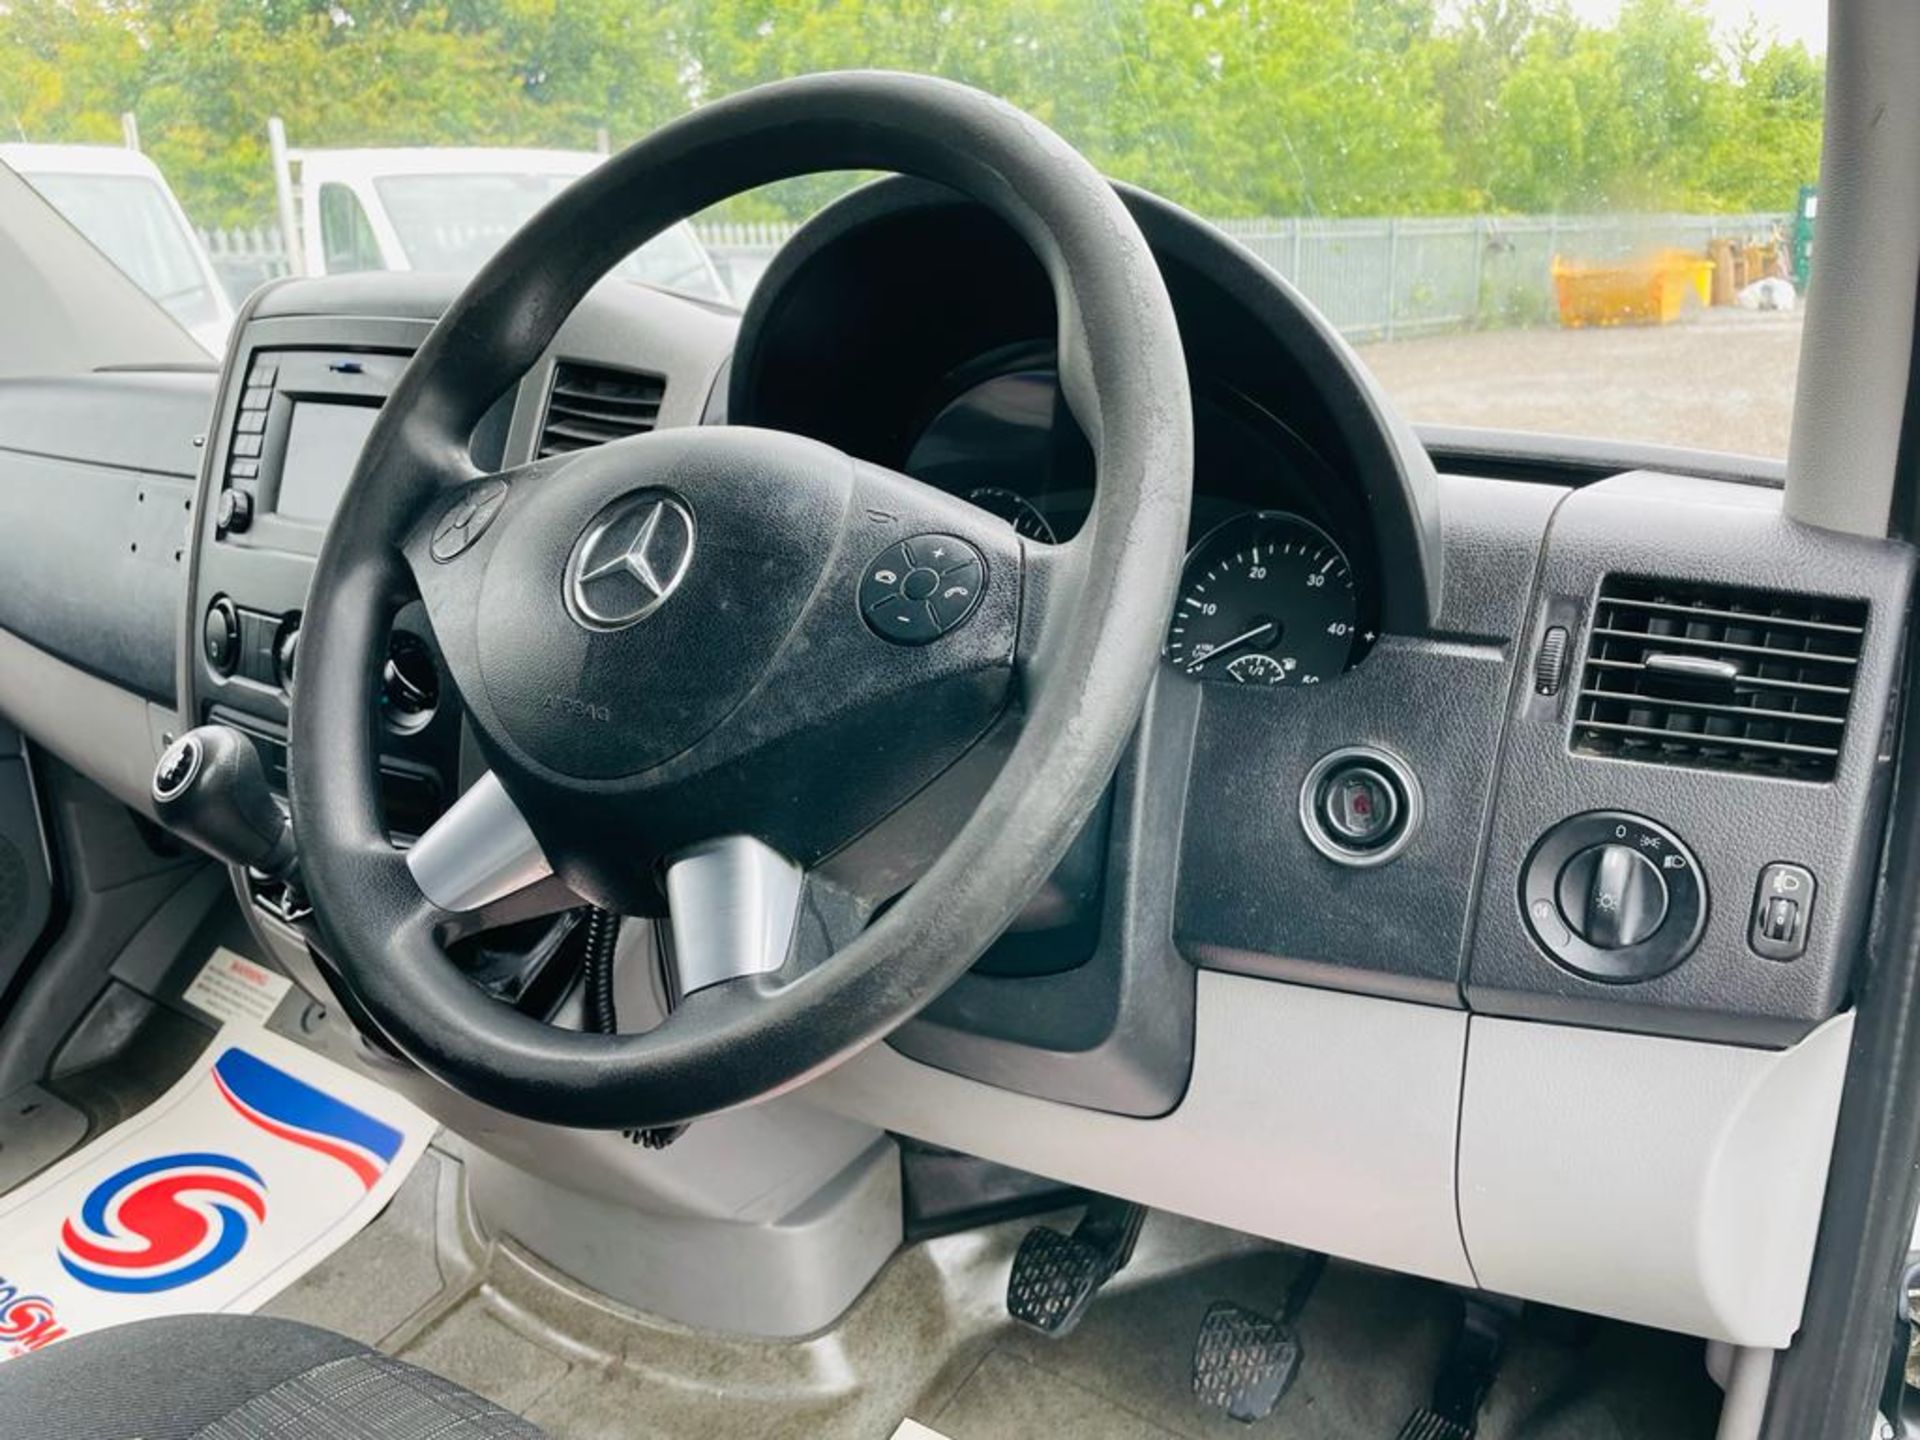 Mercedes Benz Sprinter 2.1 310 CDI L3 H3 2015 '65 Reg' - Cruise Control - Panel Van - Image 14 of 20